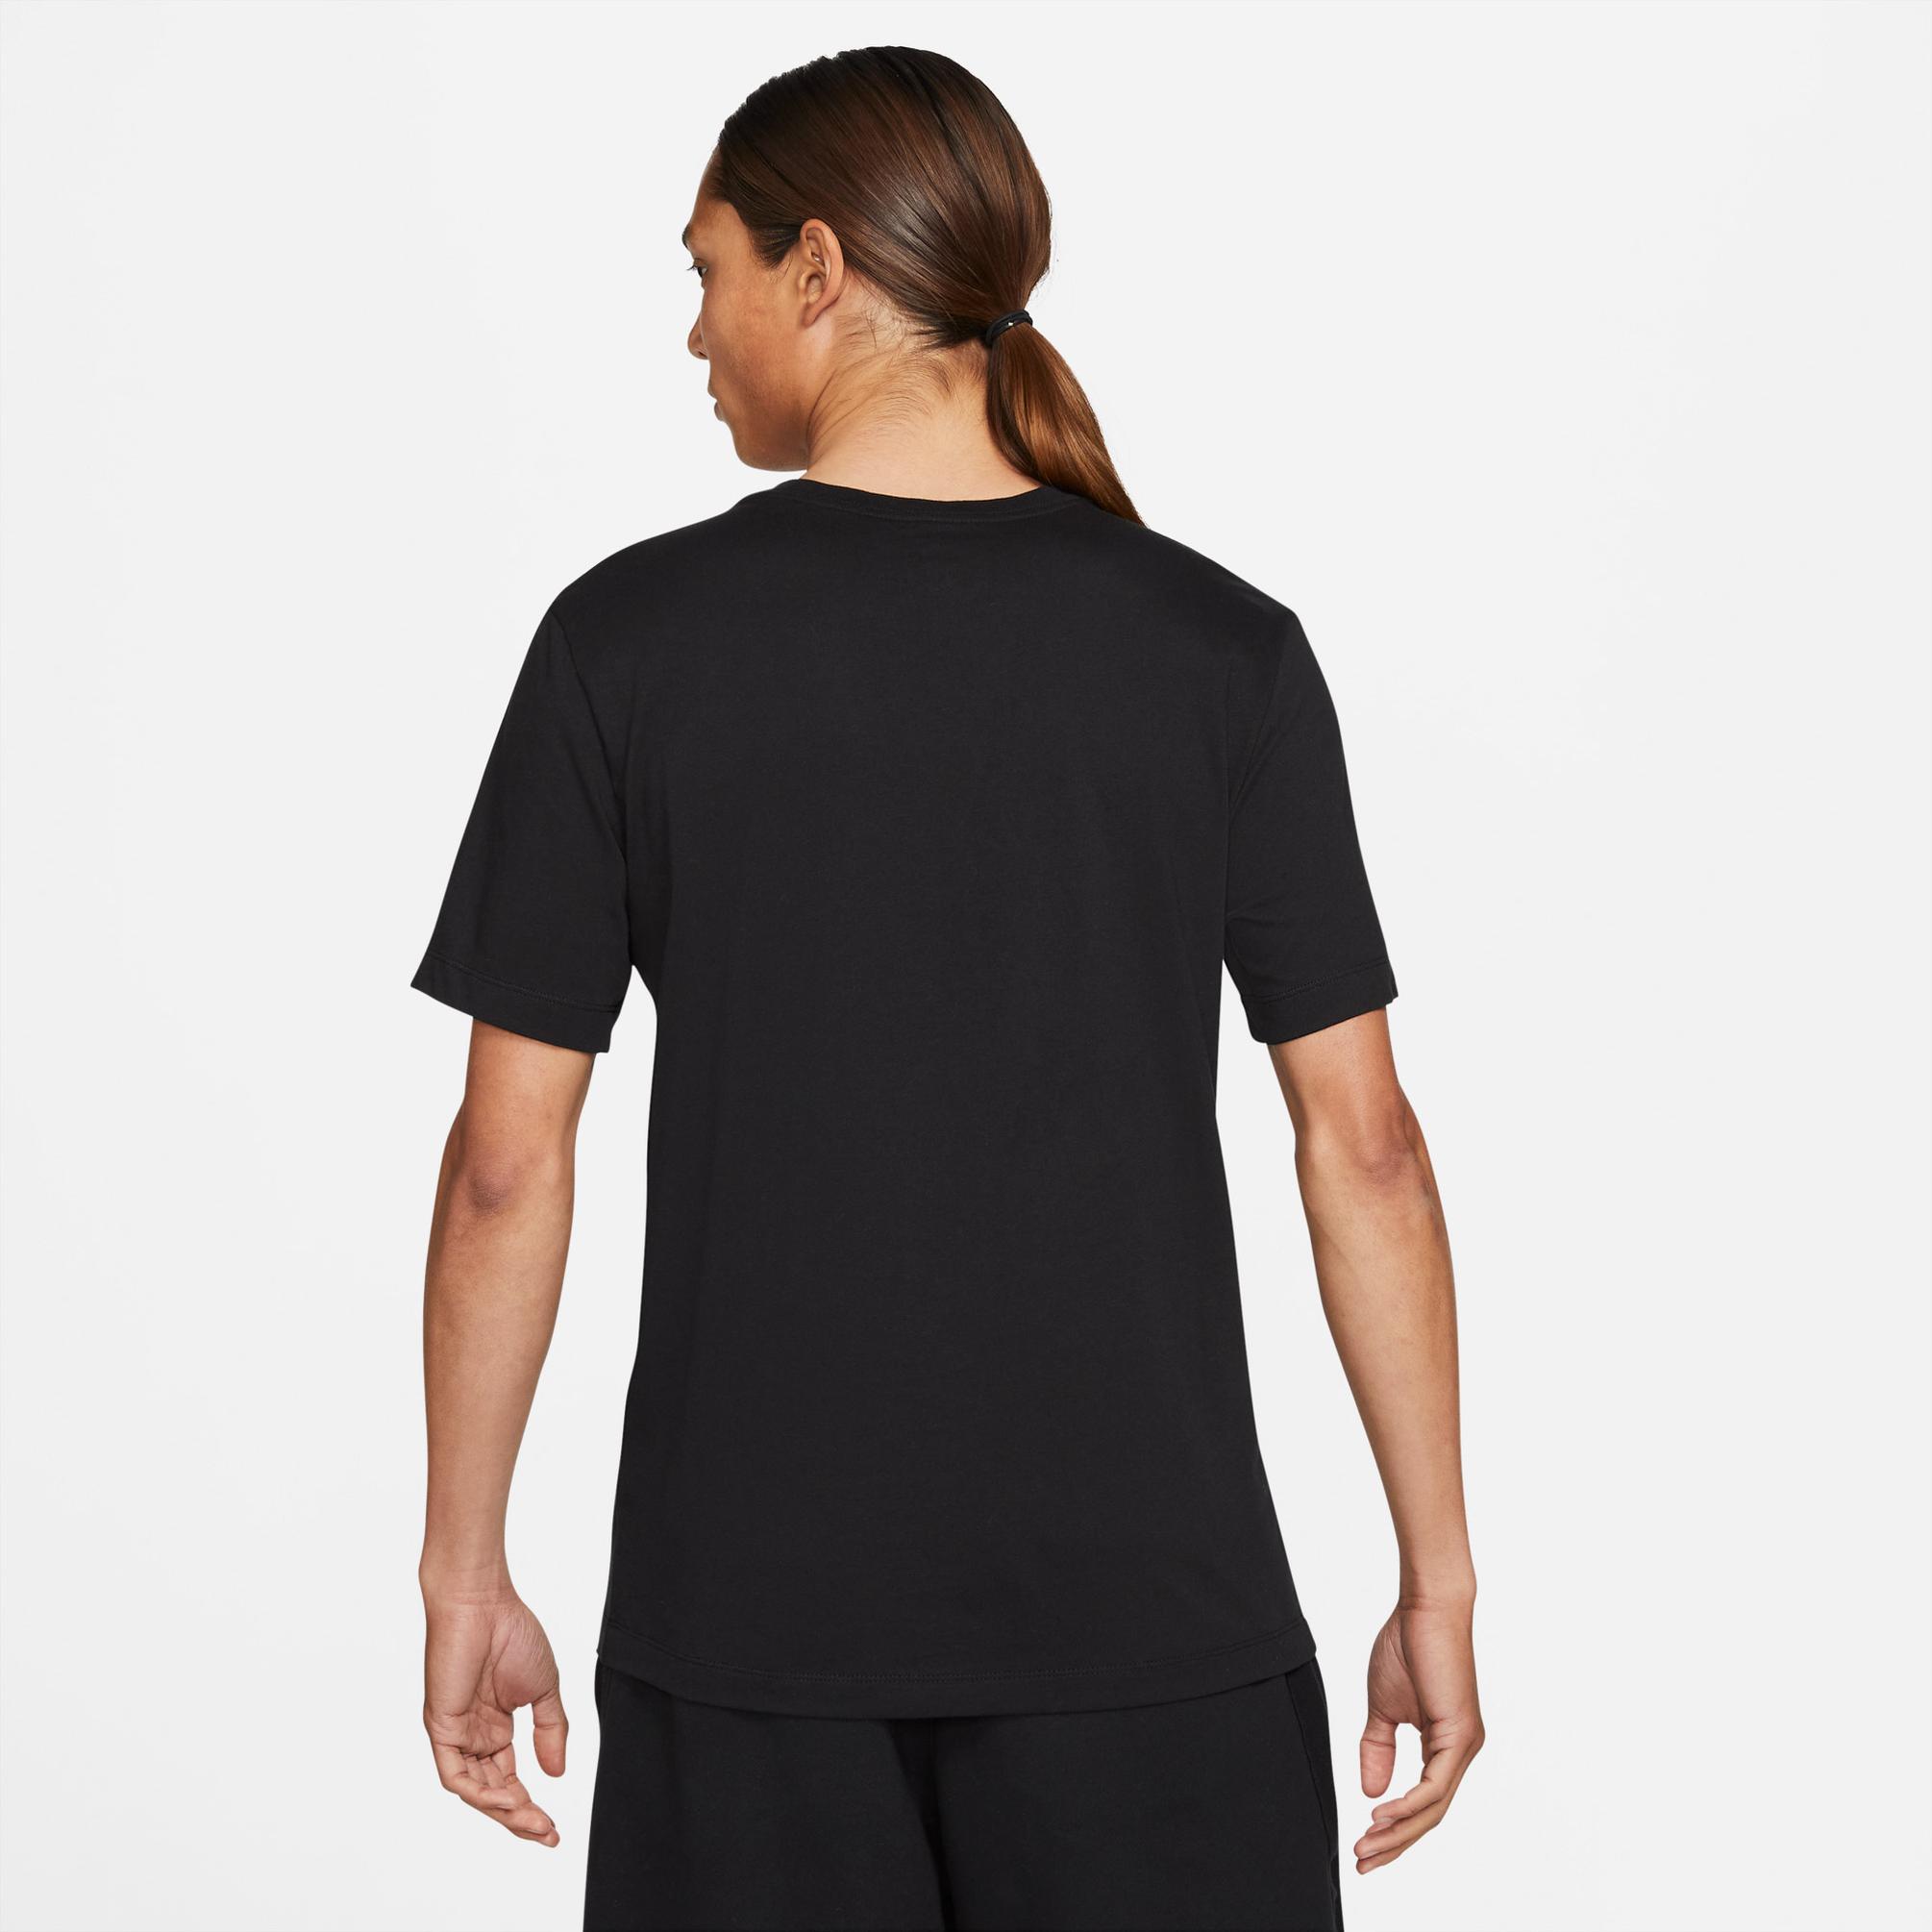  Jordan Air Wordmark Erkek Siyah T-shirt